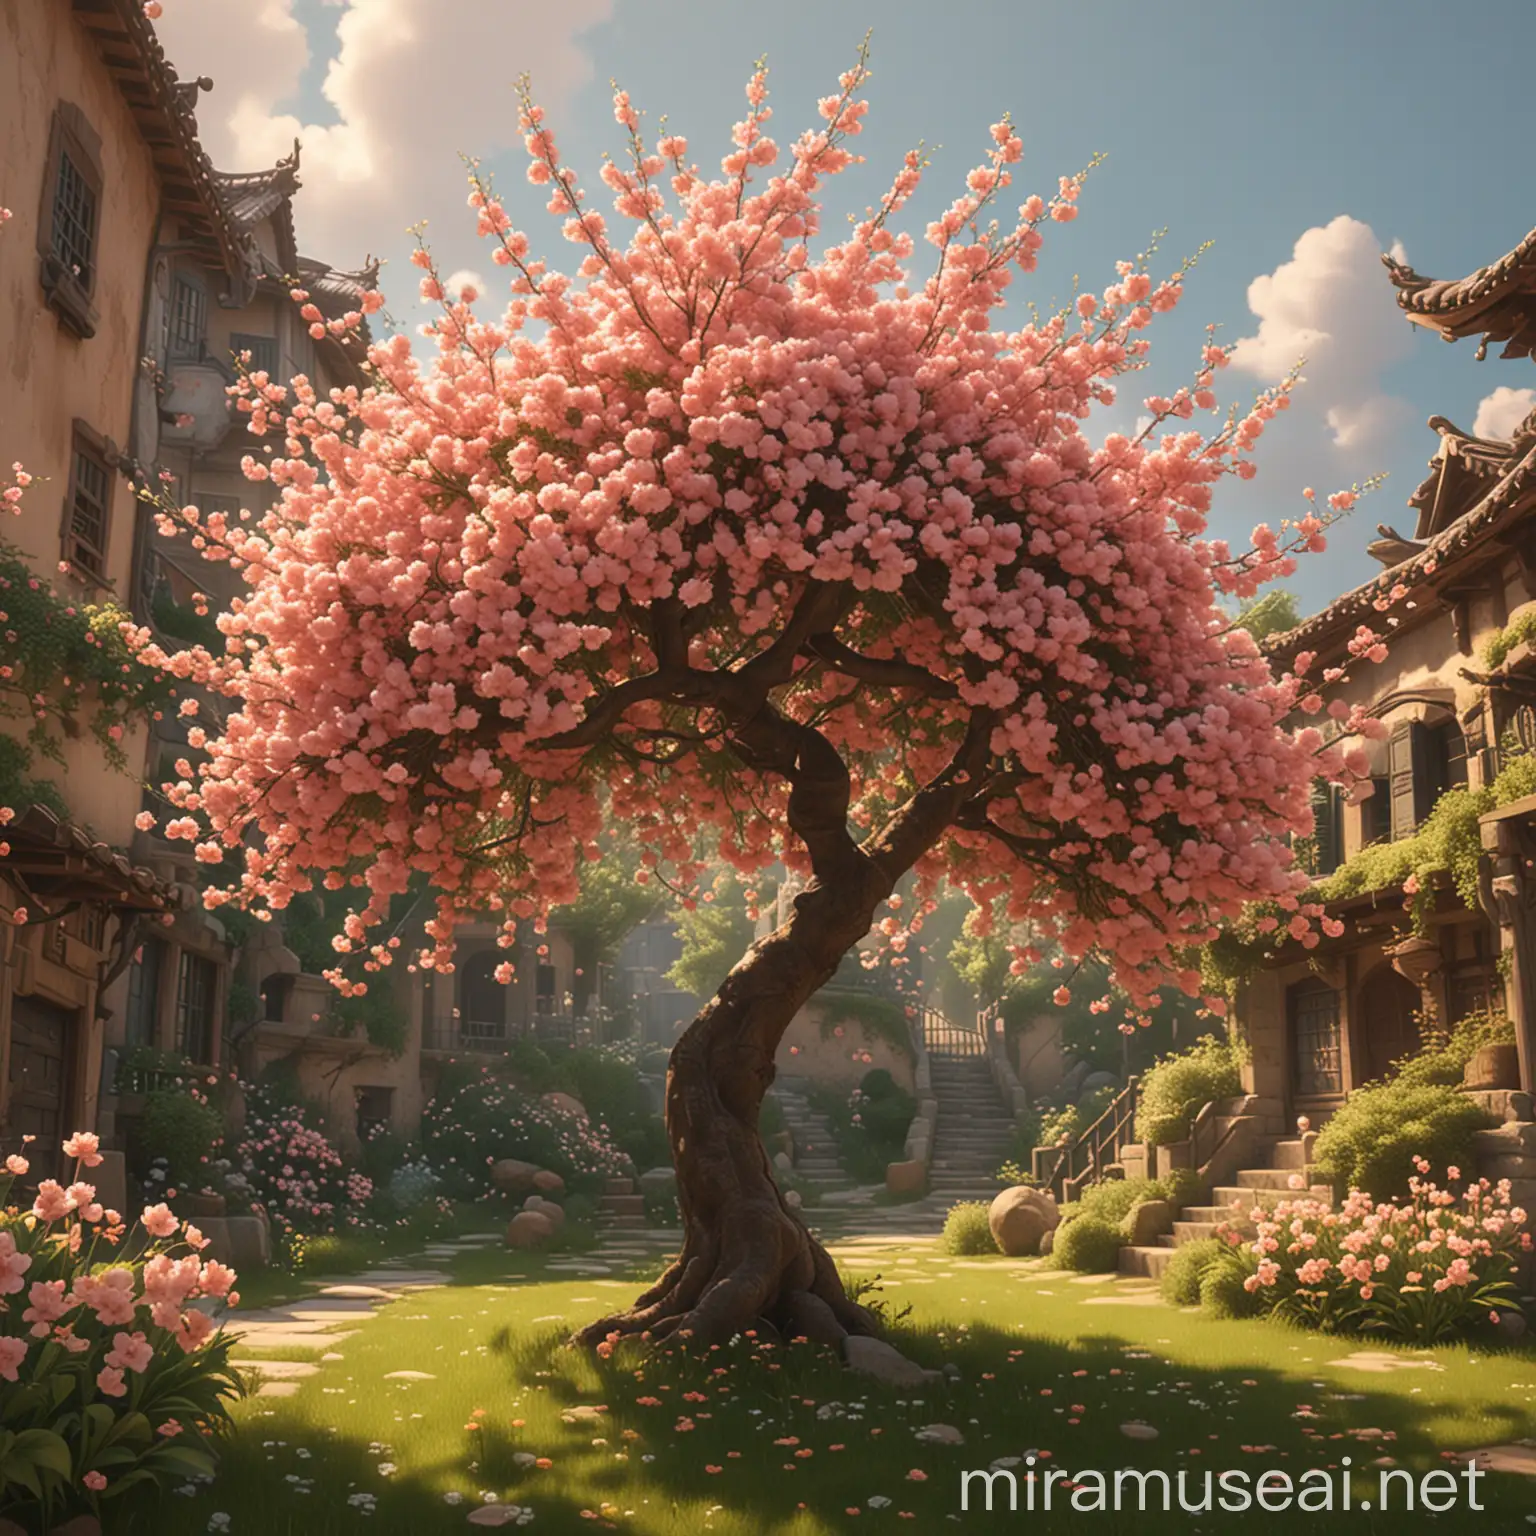 Lush Peach Blossom Tree in Pixar Style Art